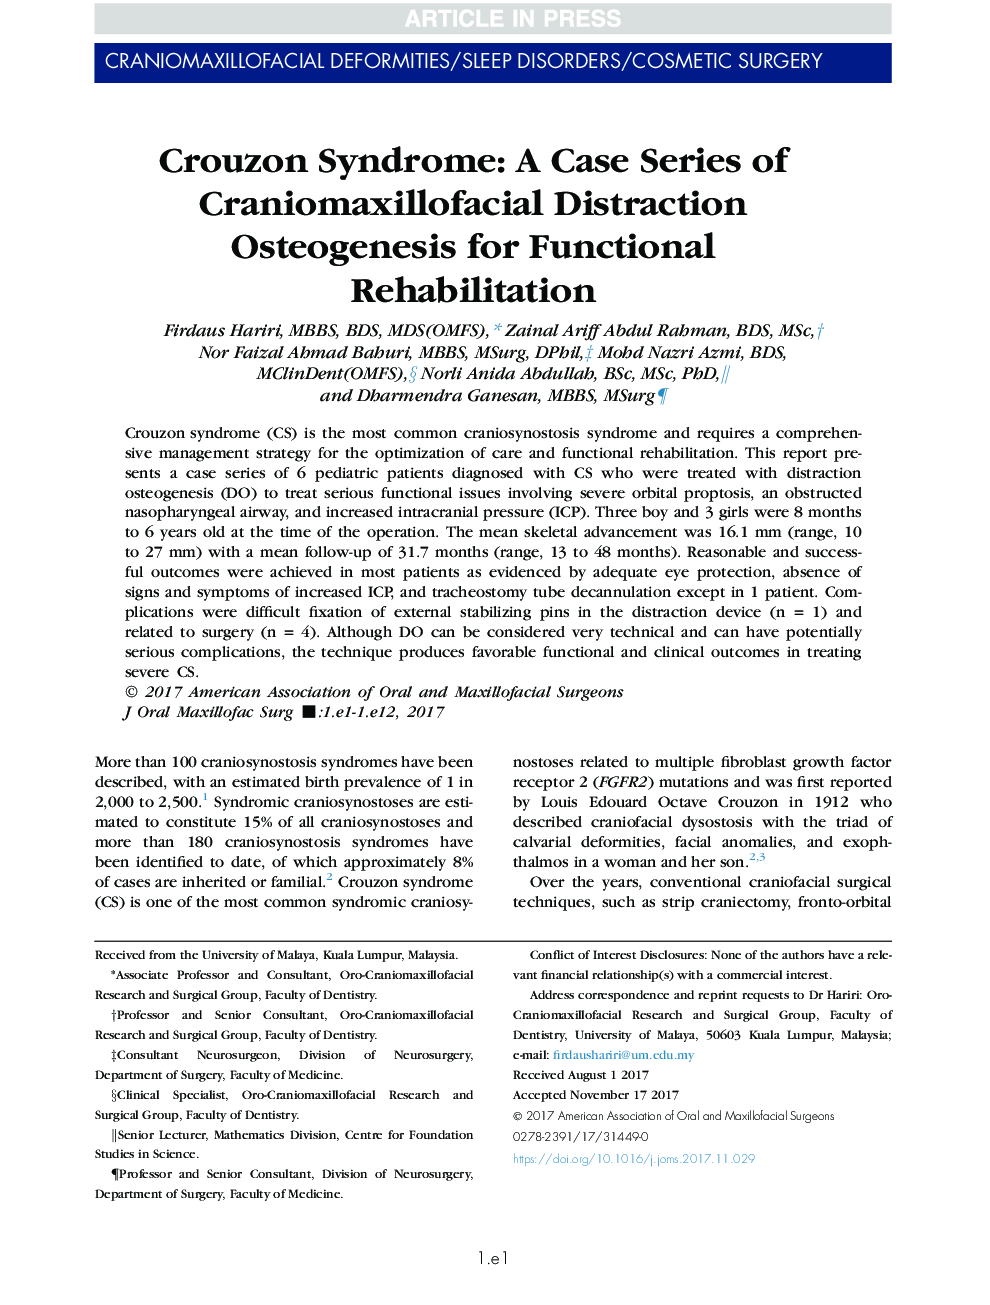 Crouzon Syndrome: A Case Series of Craniomaxillofacial Distraction Osteogenesis for Functional Rehabilitation